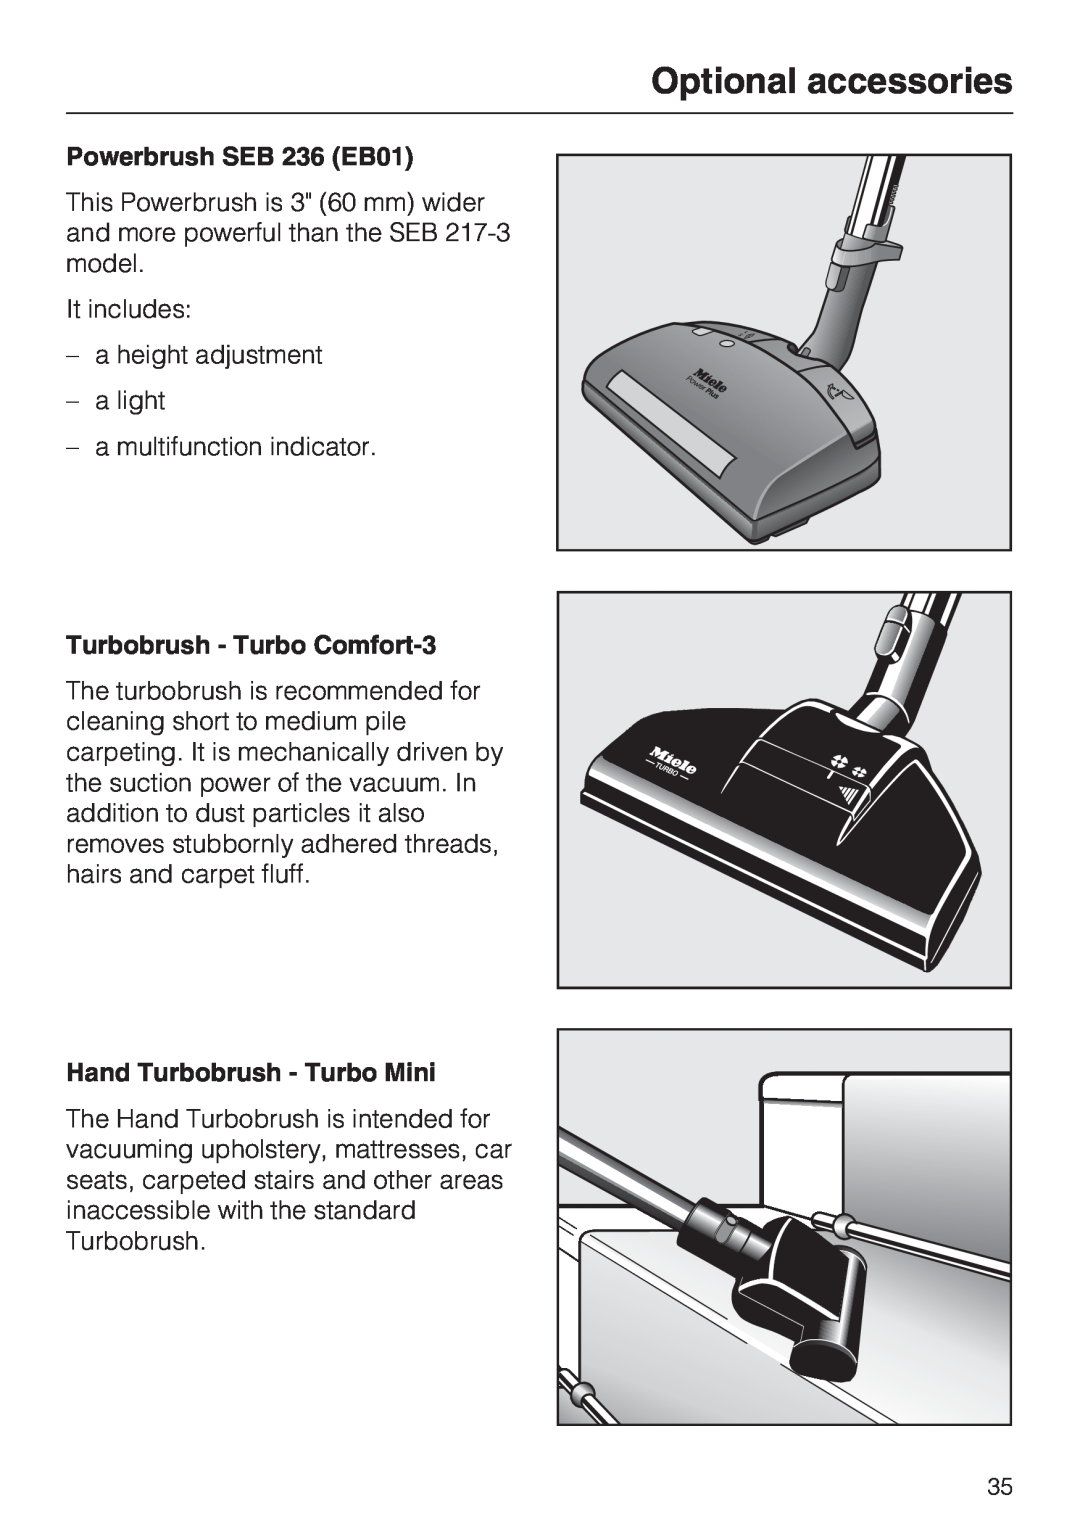 Miele S 768 Optional accessories, Powerbrush SEB 236 EB01, Turbobrush - Turbo Comfort-3, Hand Turbobrush - Turbo Mini 